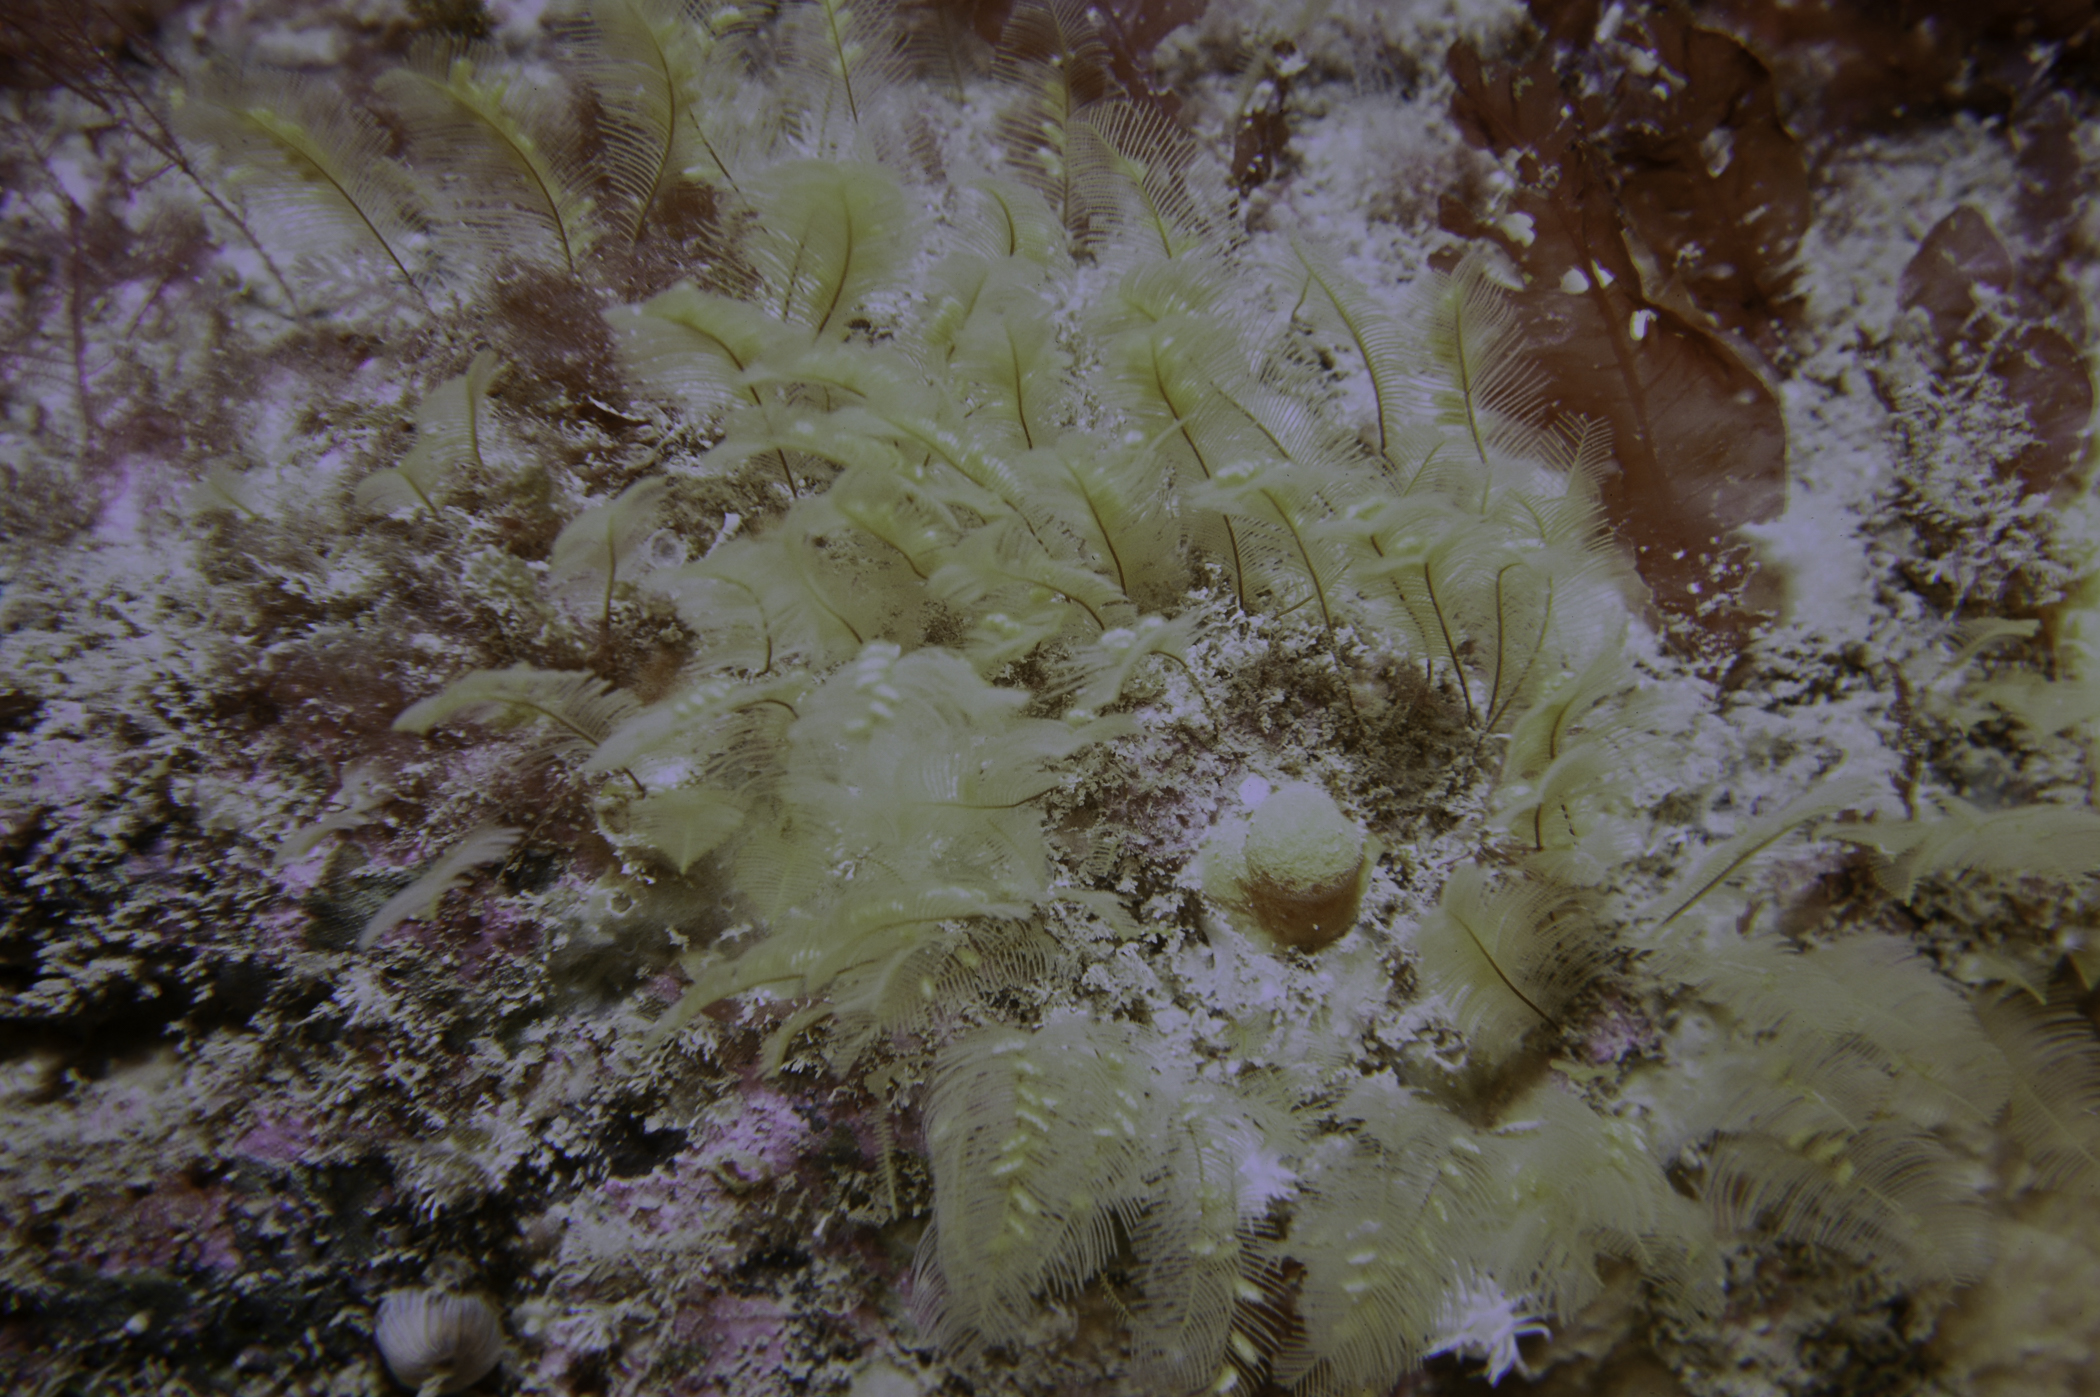 Aglaophenia tubulifera. Site: Clachen Rock, Bull Point, Rathlin Island. 